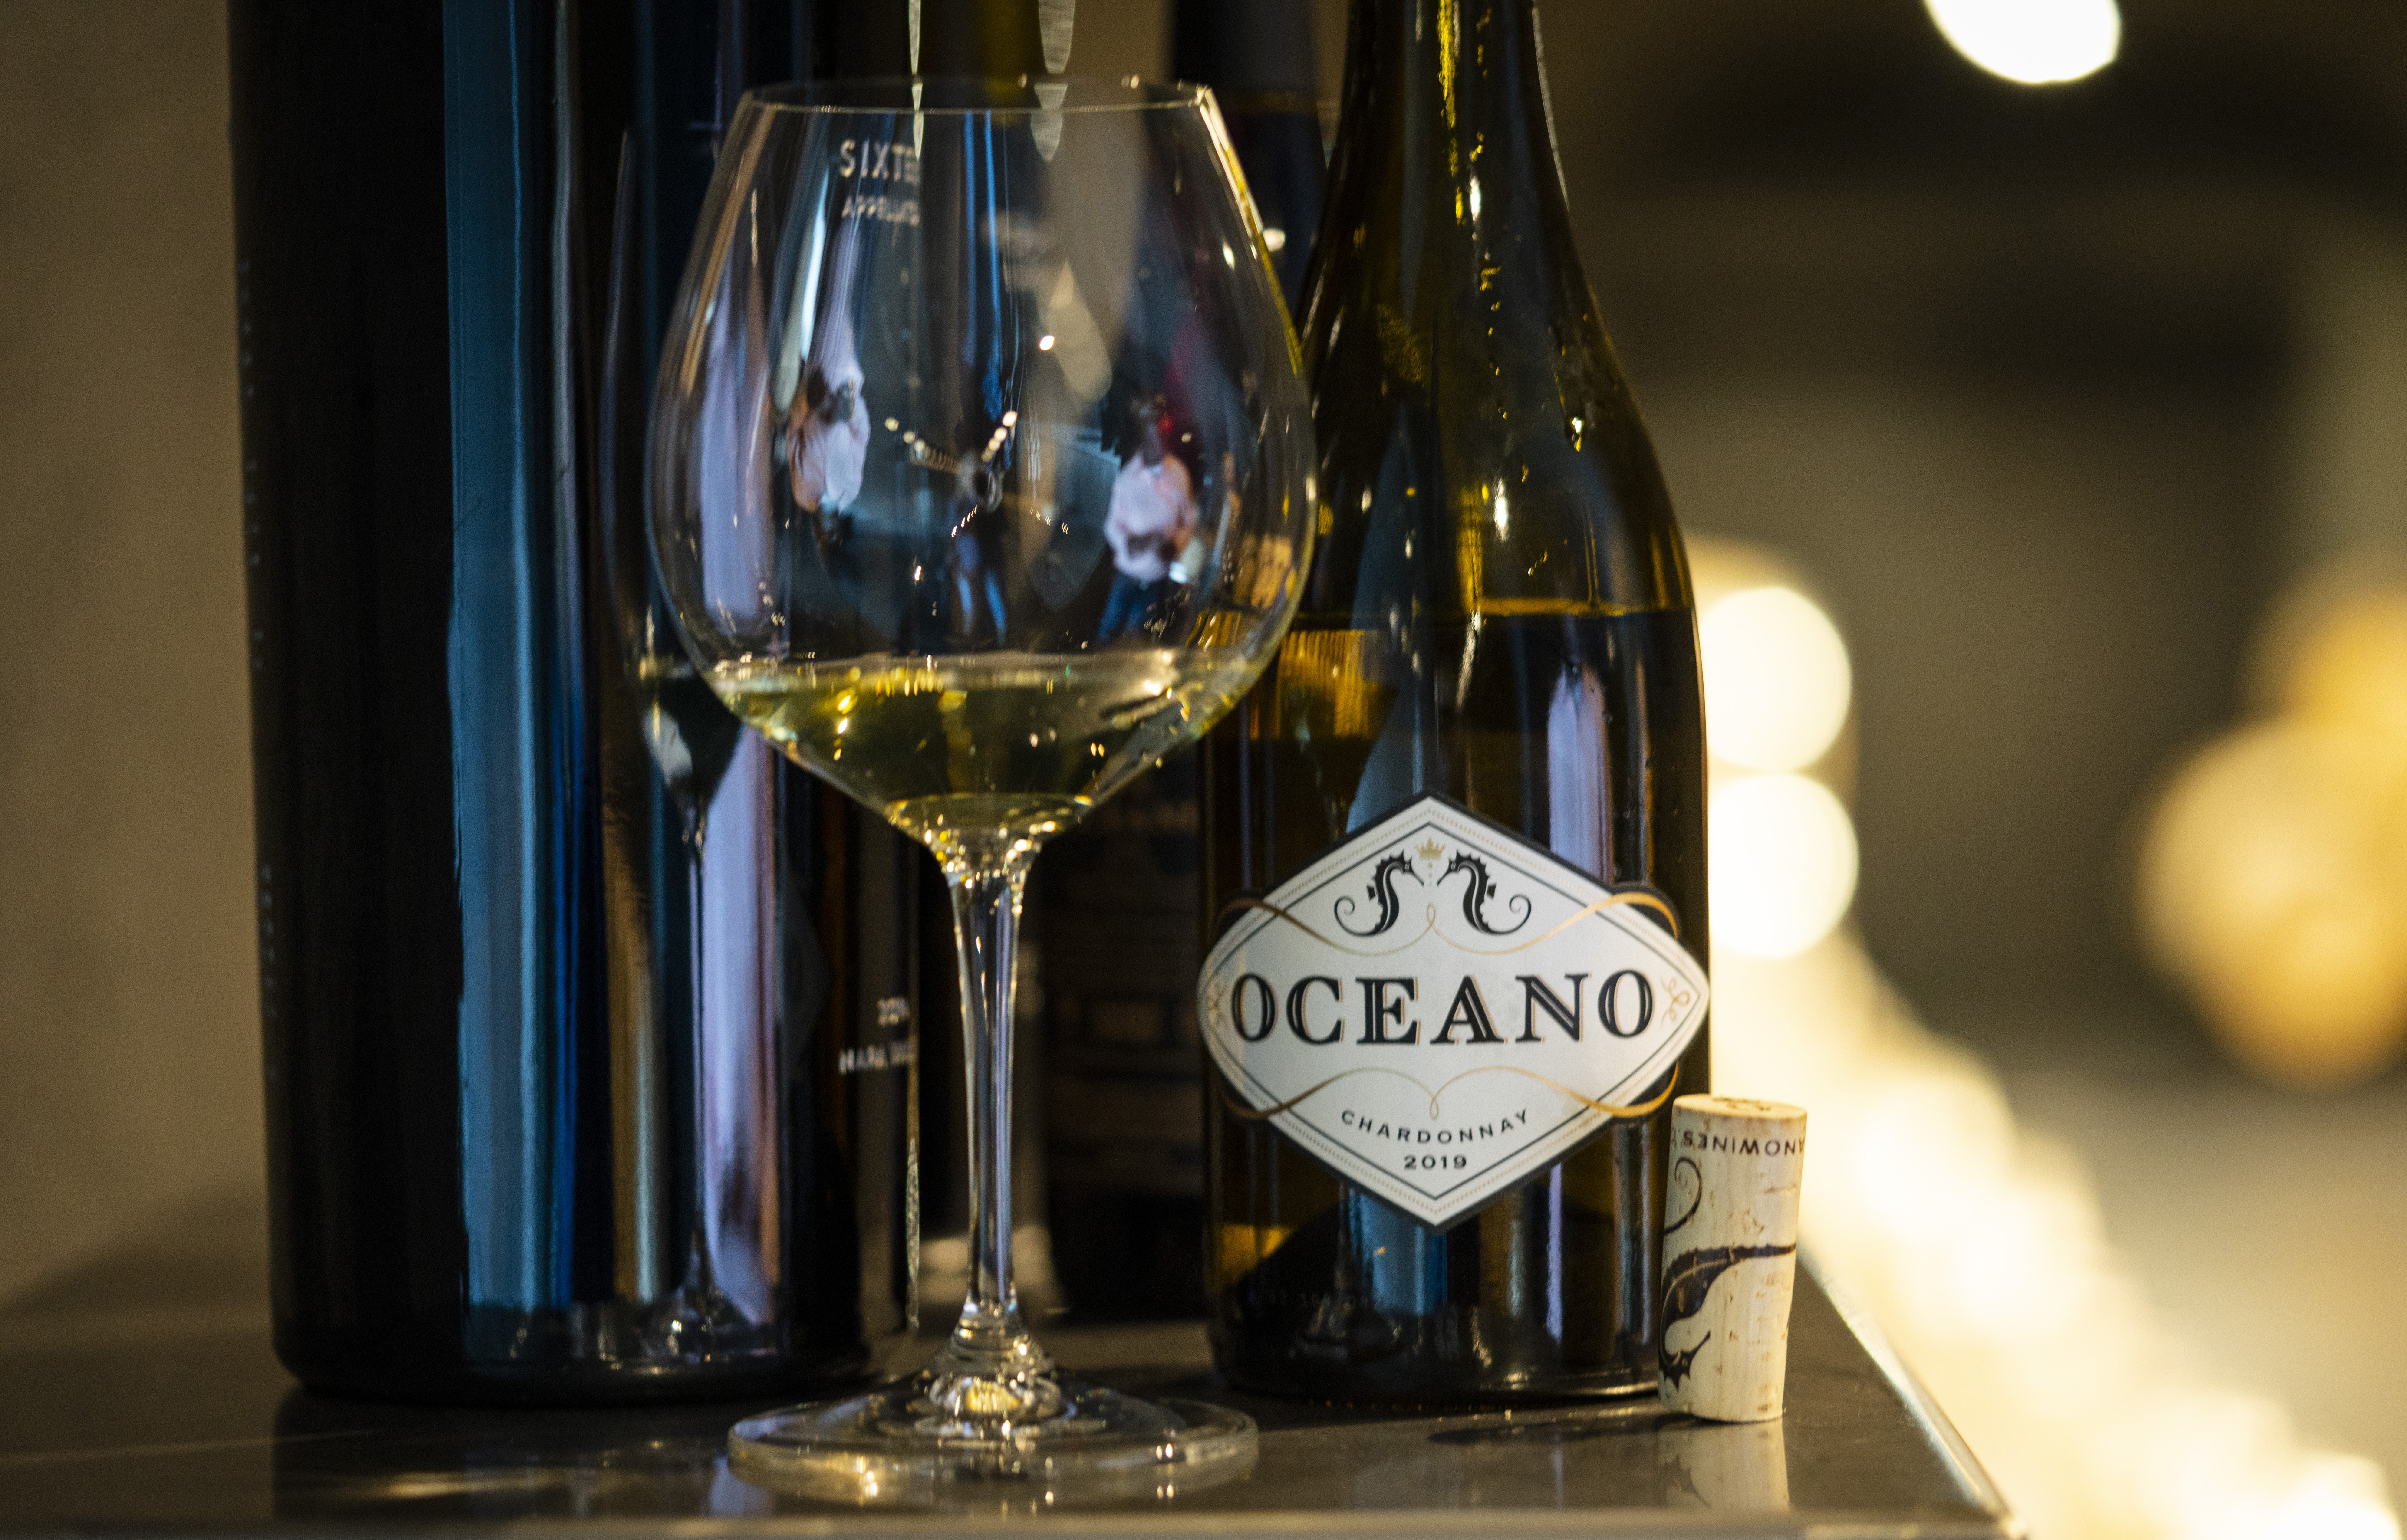 Close up of Oceano wine in wine glass